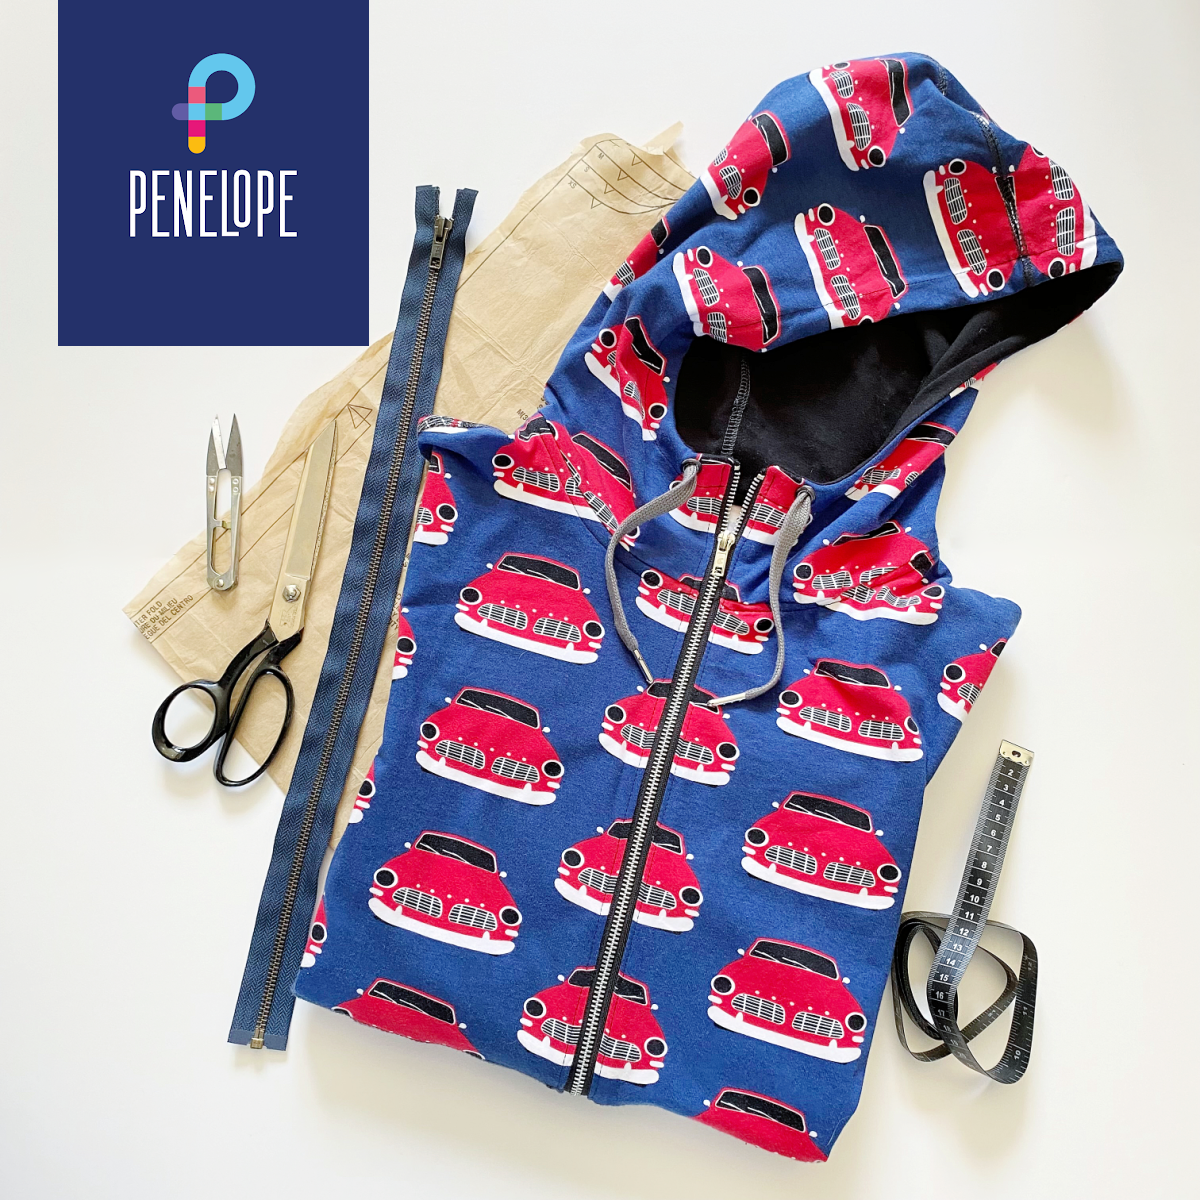 Pénélope Introduction to clothing making